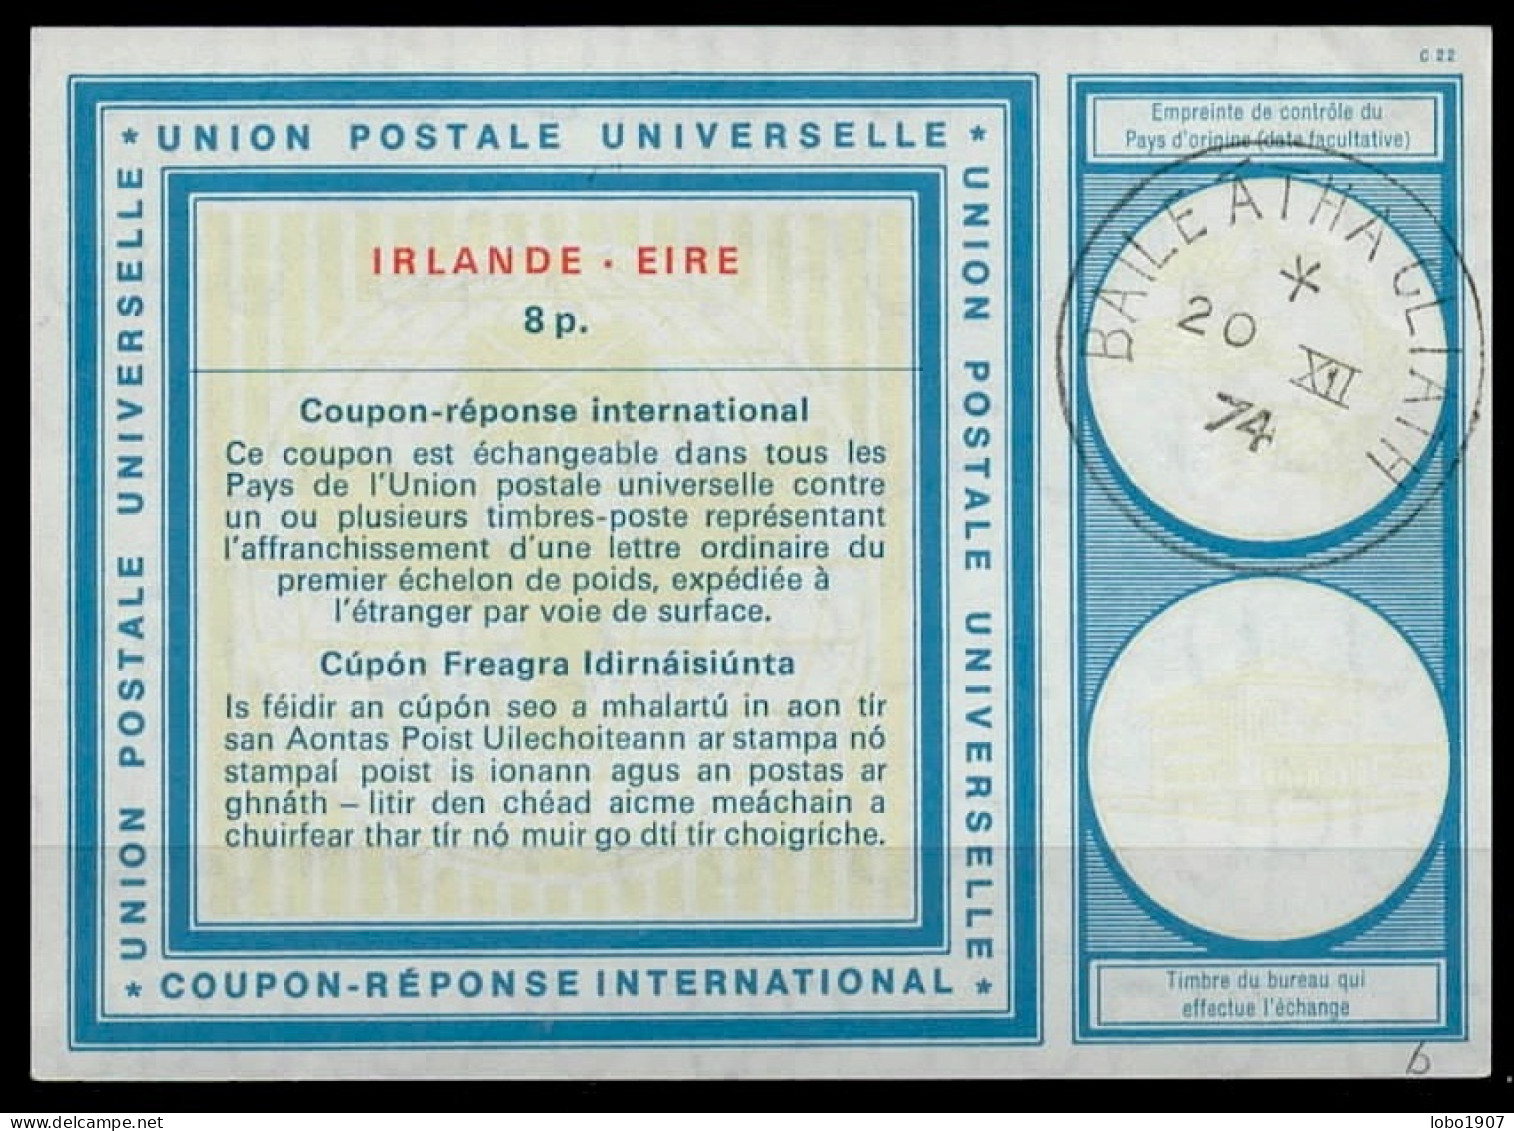 IRLANDE IRELAND ÉIRE  Vi21  8p. International Reply Coupon Reponse Antwortschein IRC IAS O B.A.C. 20.12.74 - Entiers Postaux